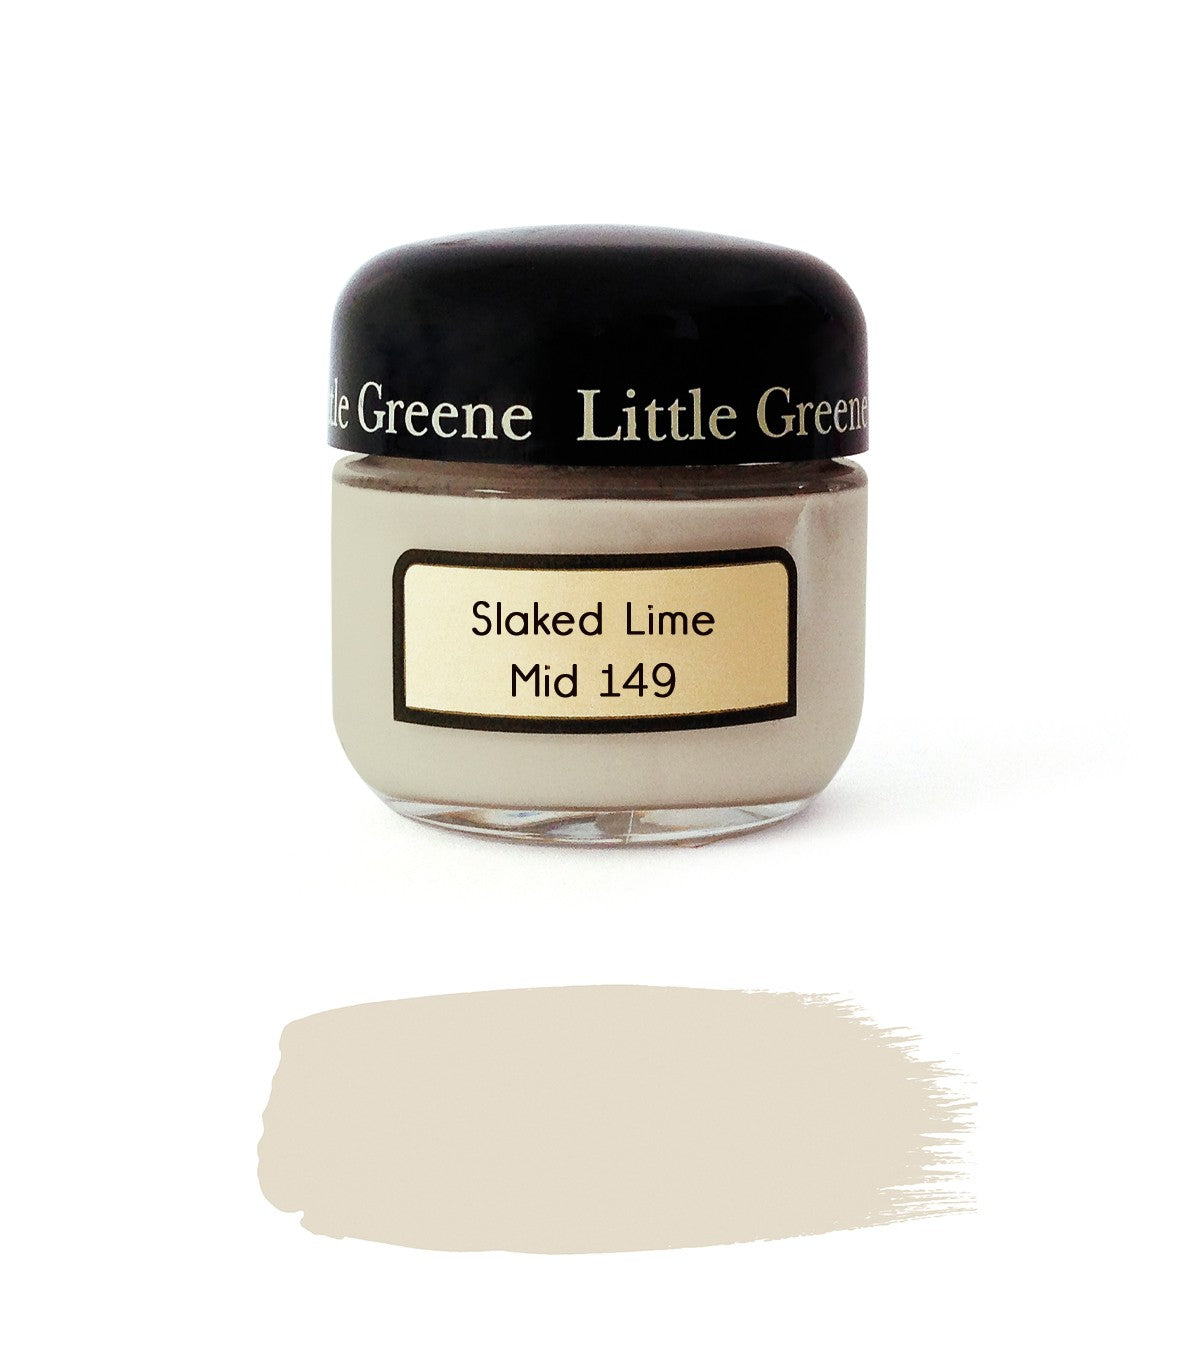 Little Greene Farbe - Slaked lime mid (149)